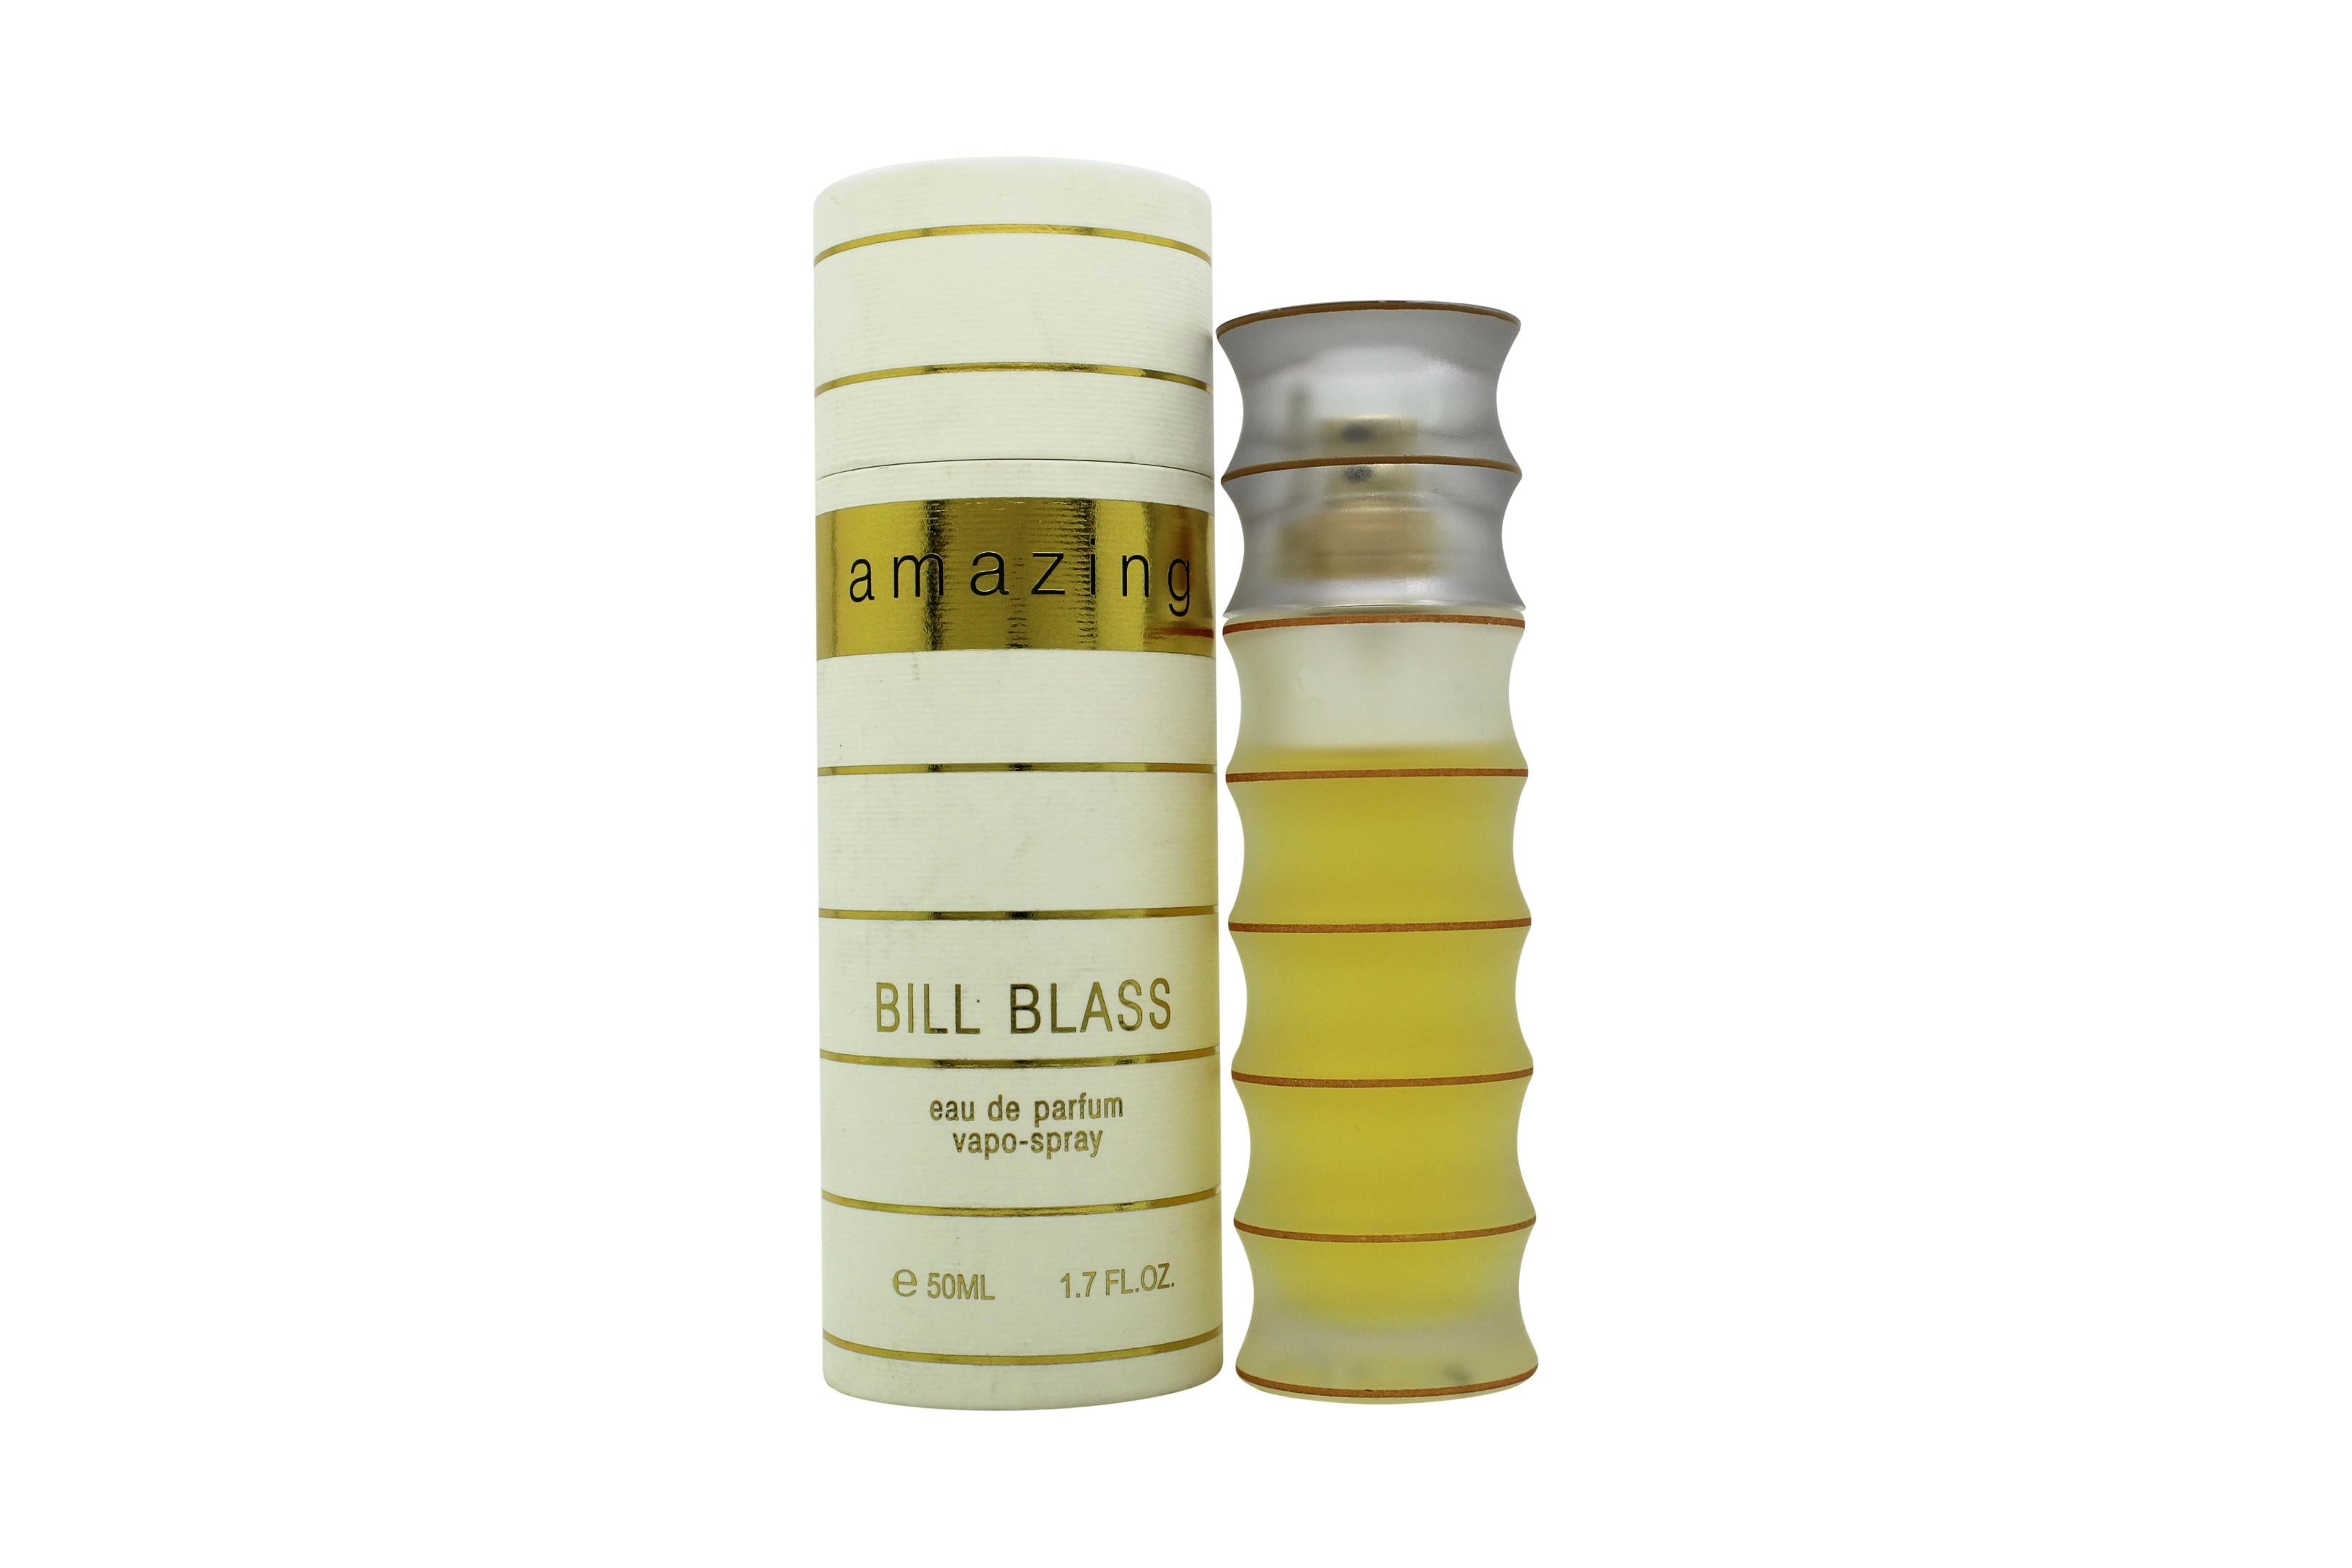 View Bill Blass Amazing Eau de Parfum 50ml Spray information